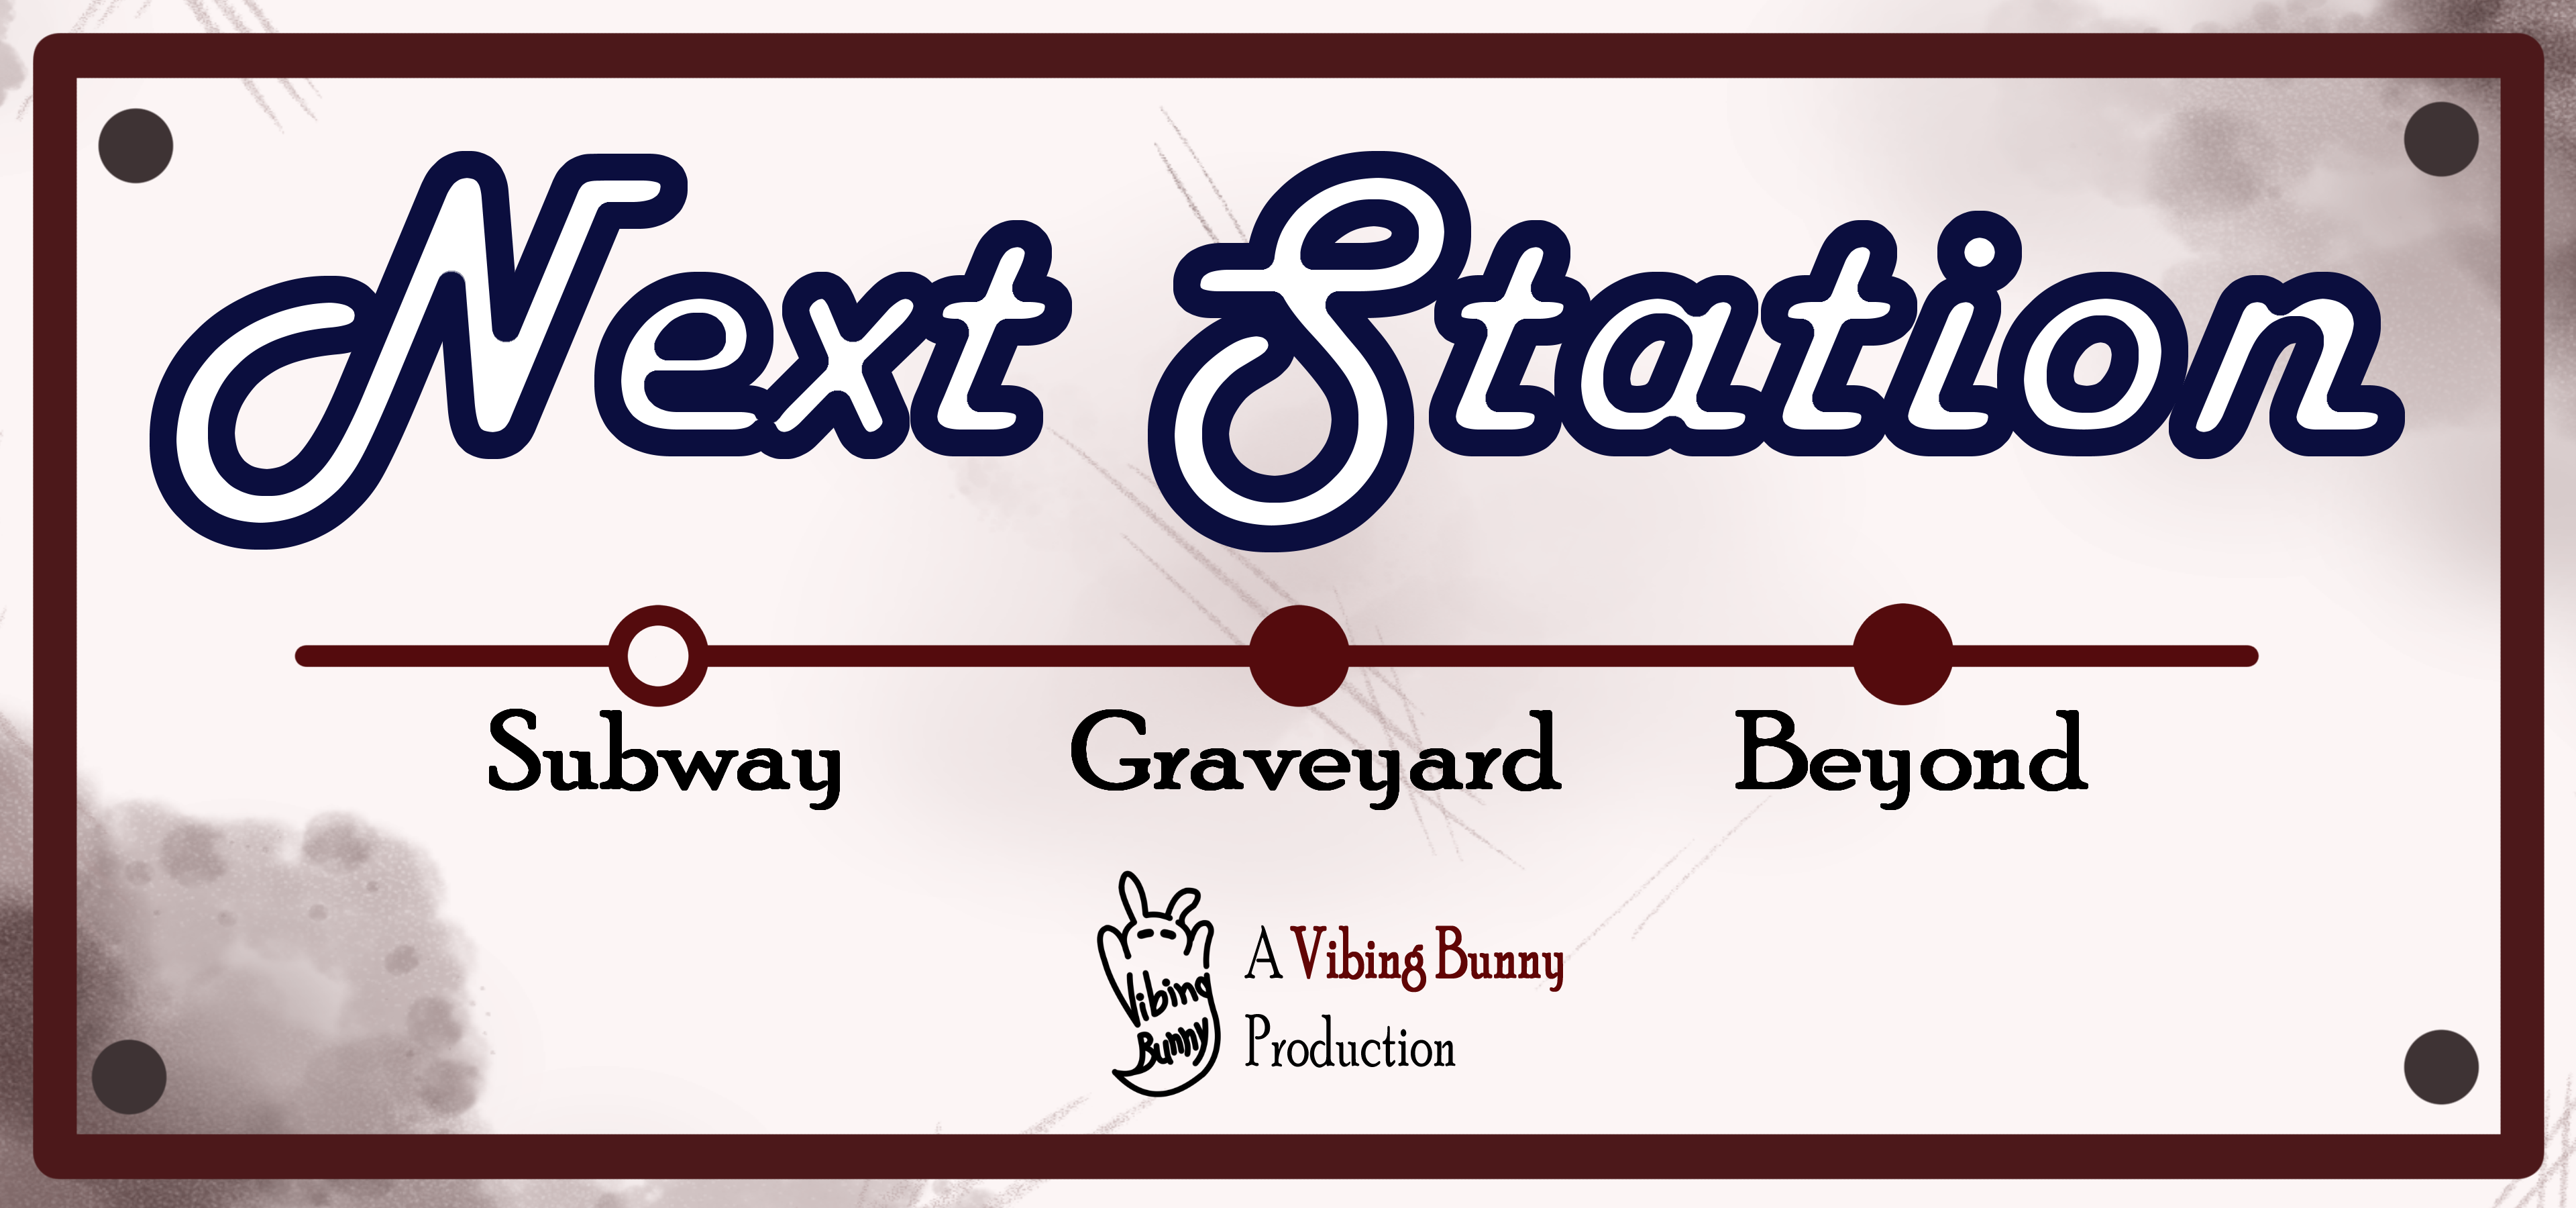 Next Station: Subway, Graveyard and Beyond.